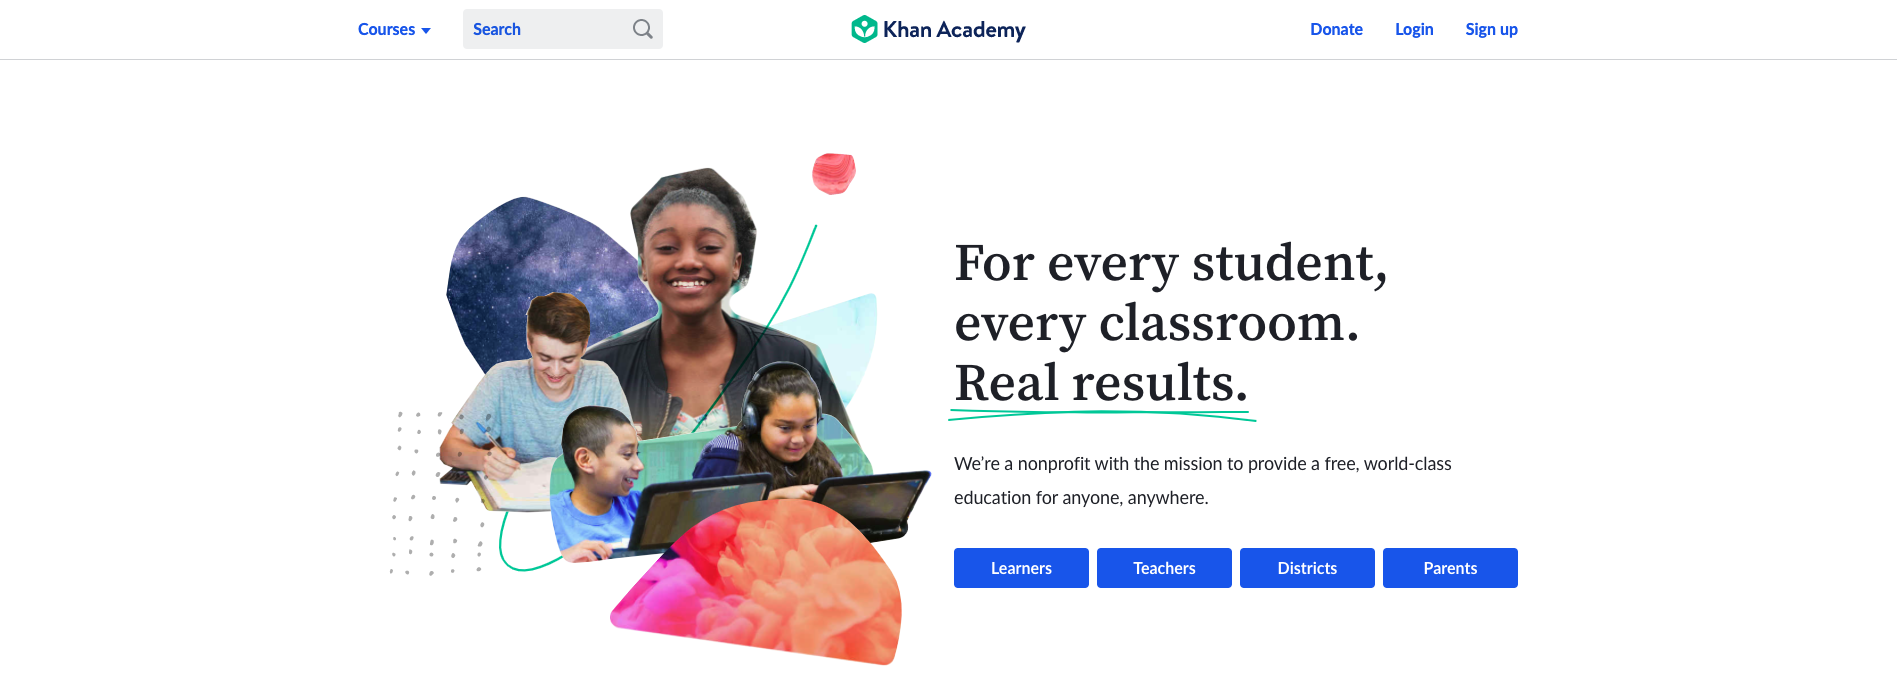 Khan Academy Landing Page